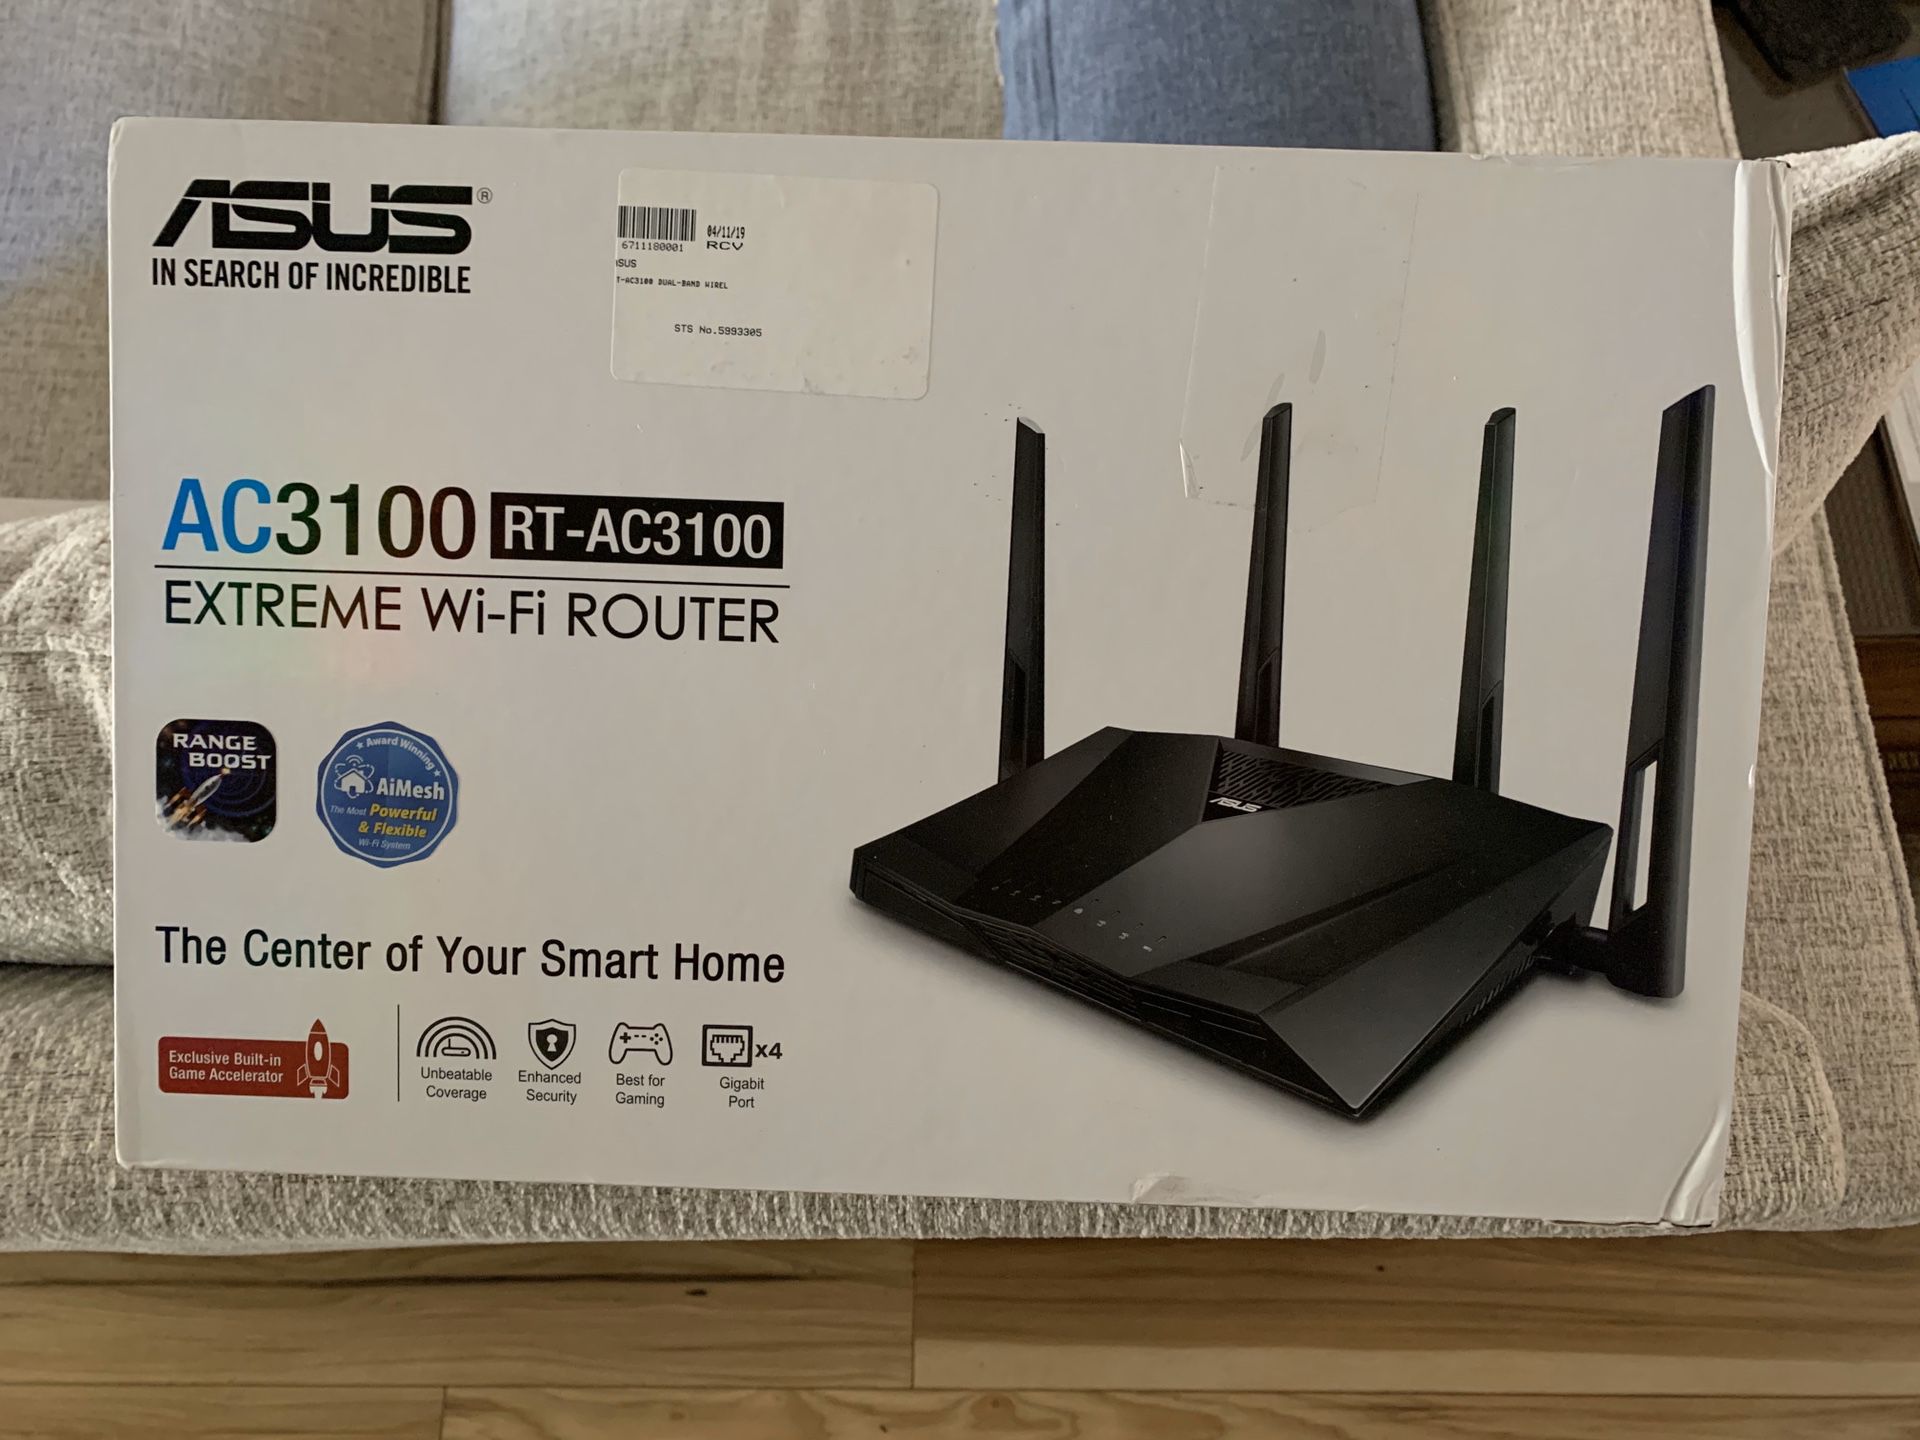 Asus RT-AC3100 dual band gigabit router